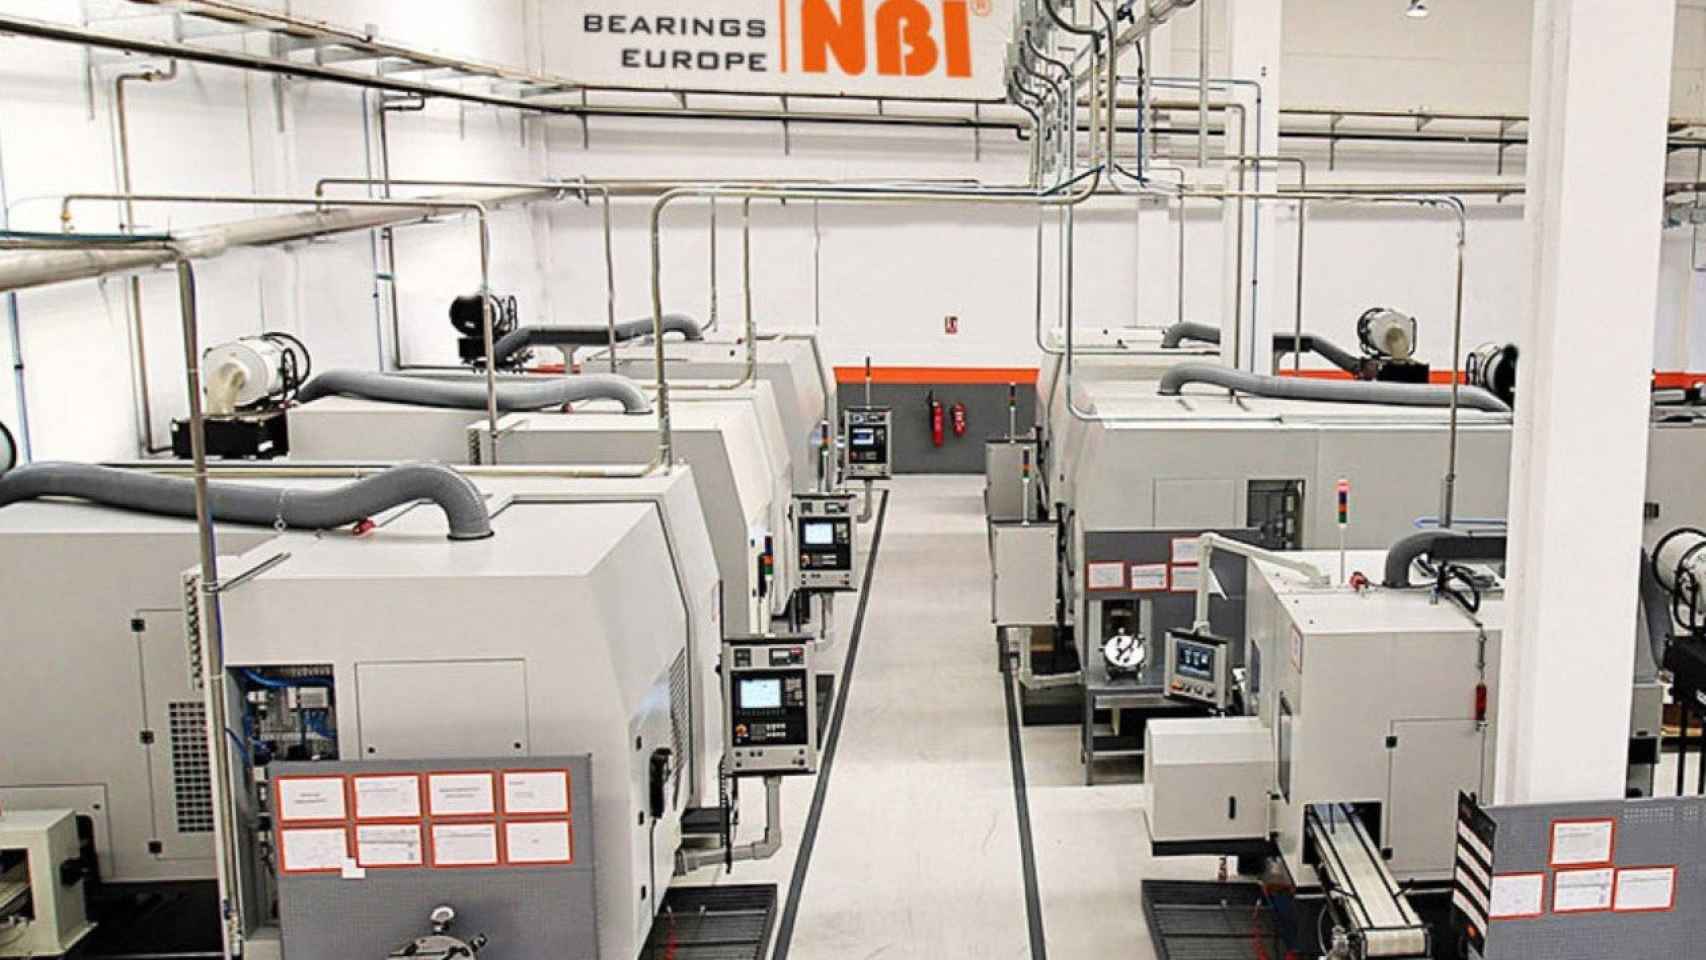 Fbrica de NBI en Oquendo, lava / NBI